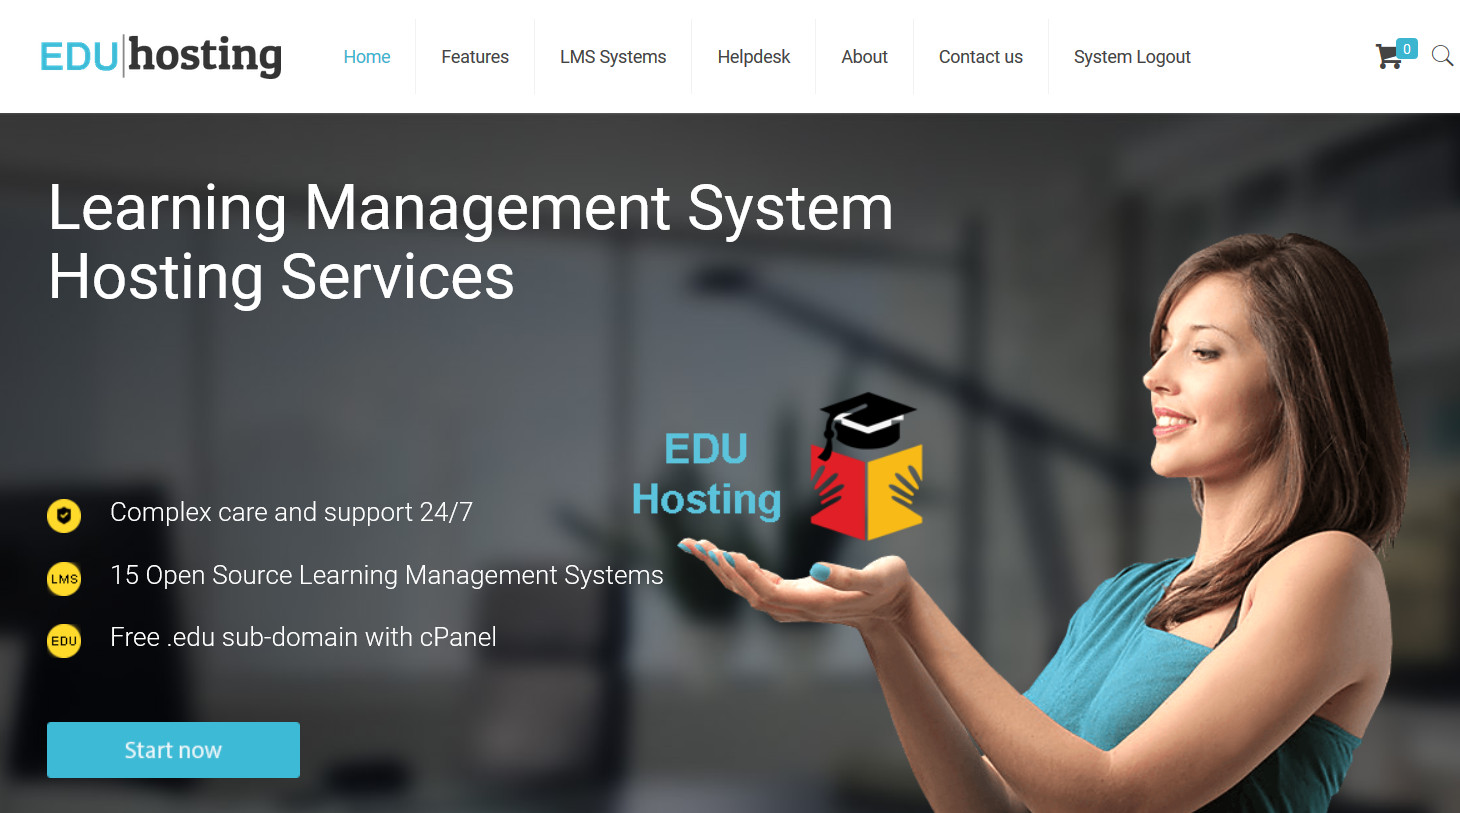 EDU Hosting Services